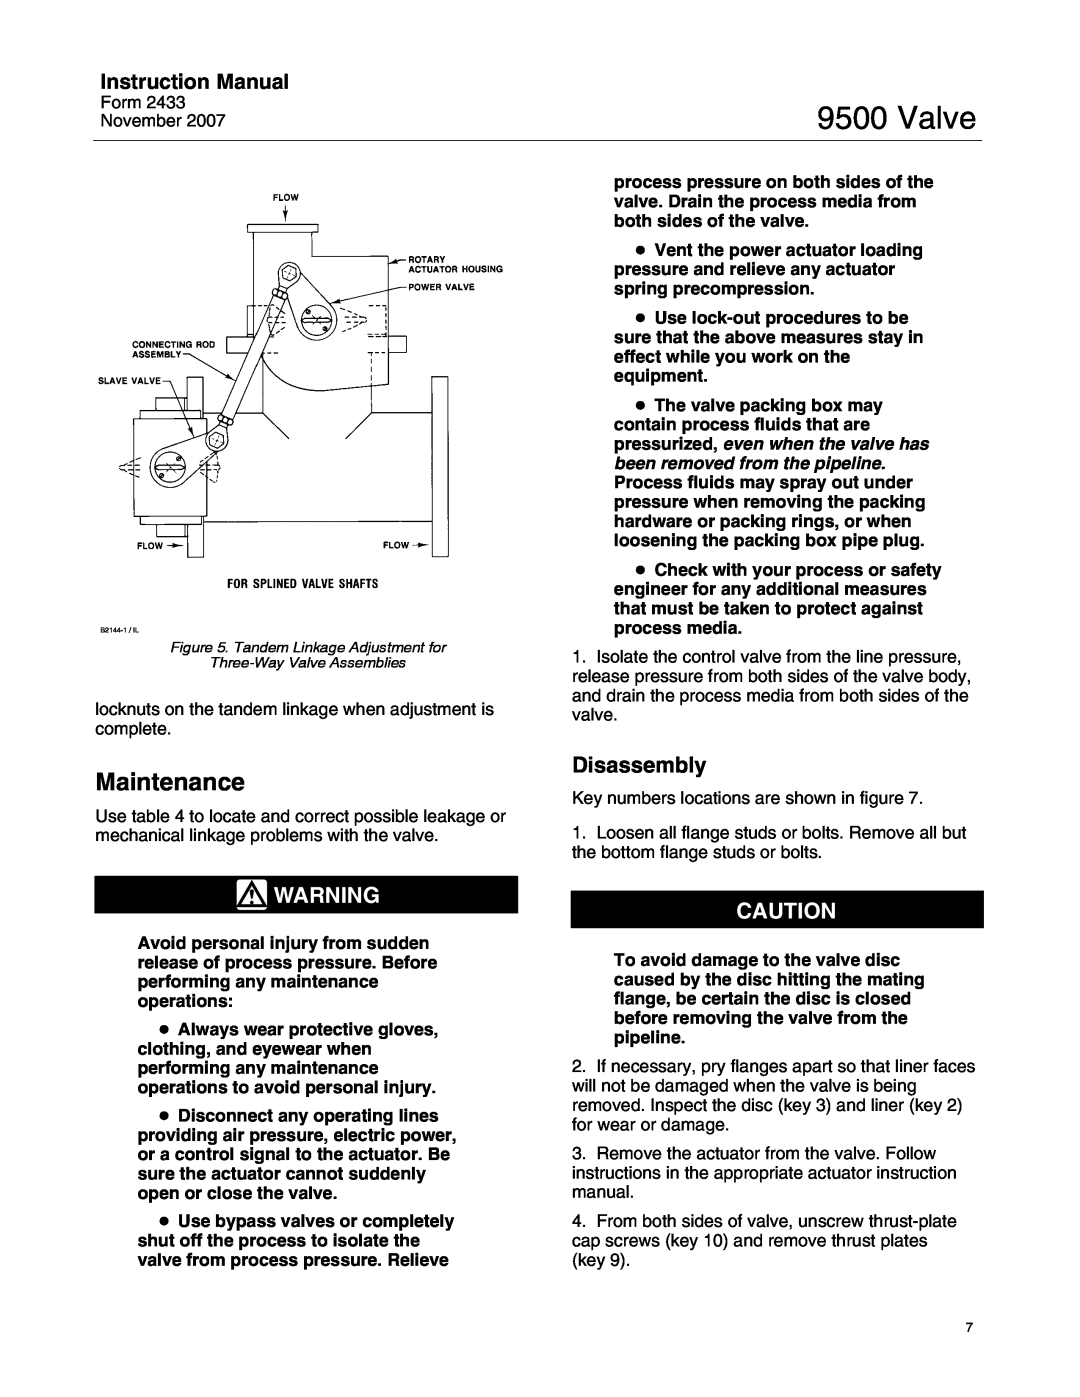 Fisher 9500 instruction manual Maintenance, Disassembly, Valve, Instruction Manual 